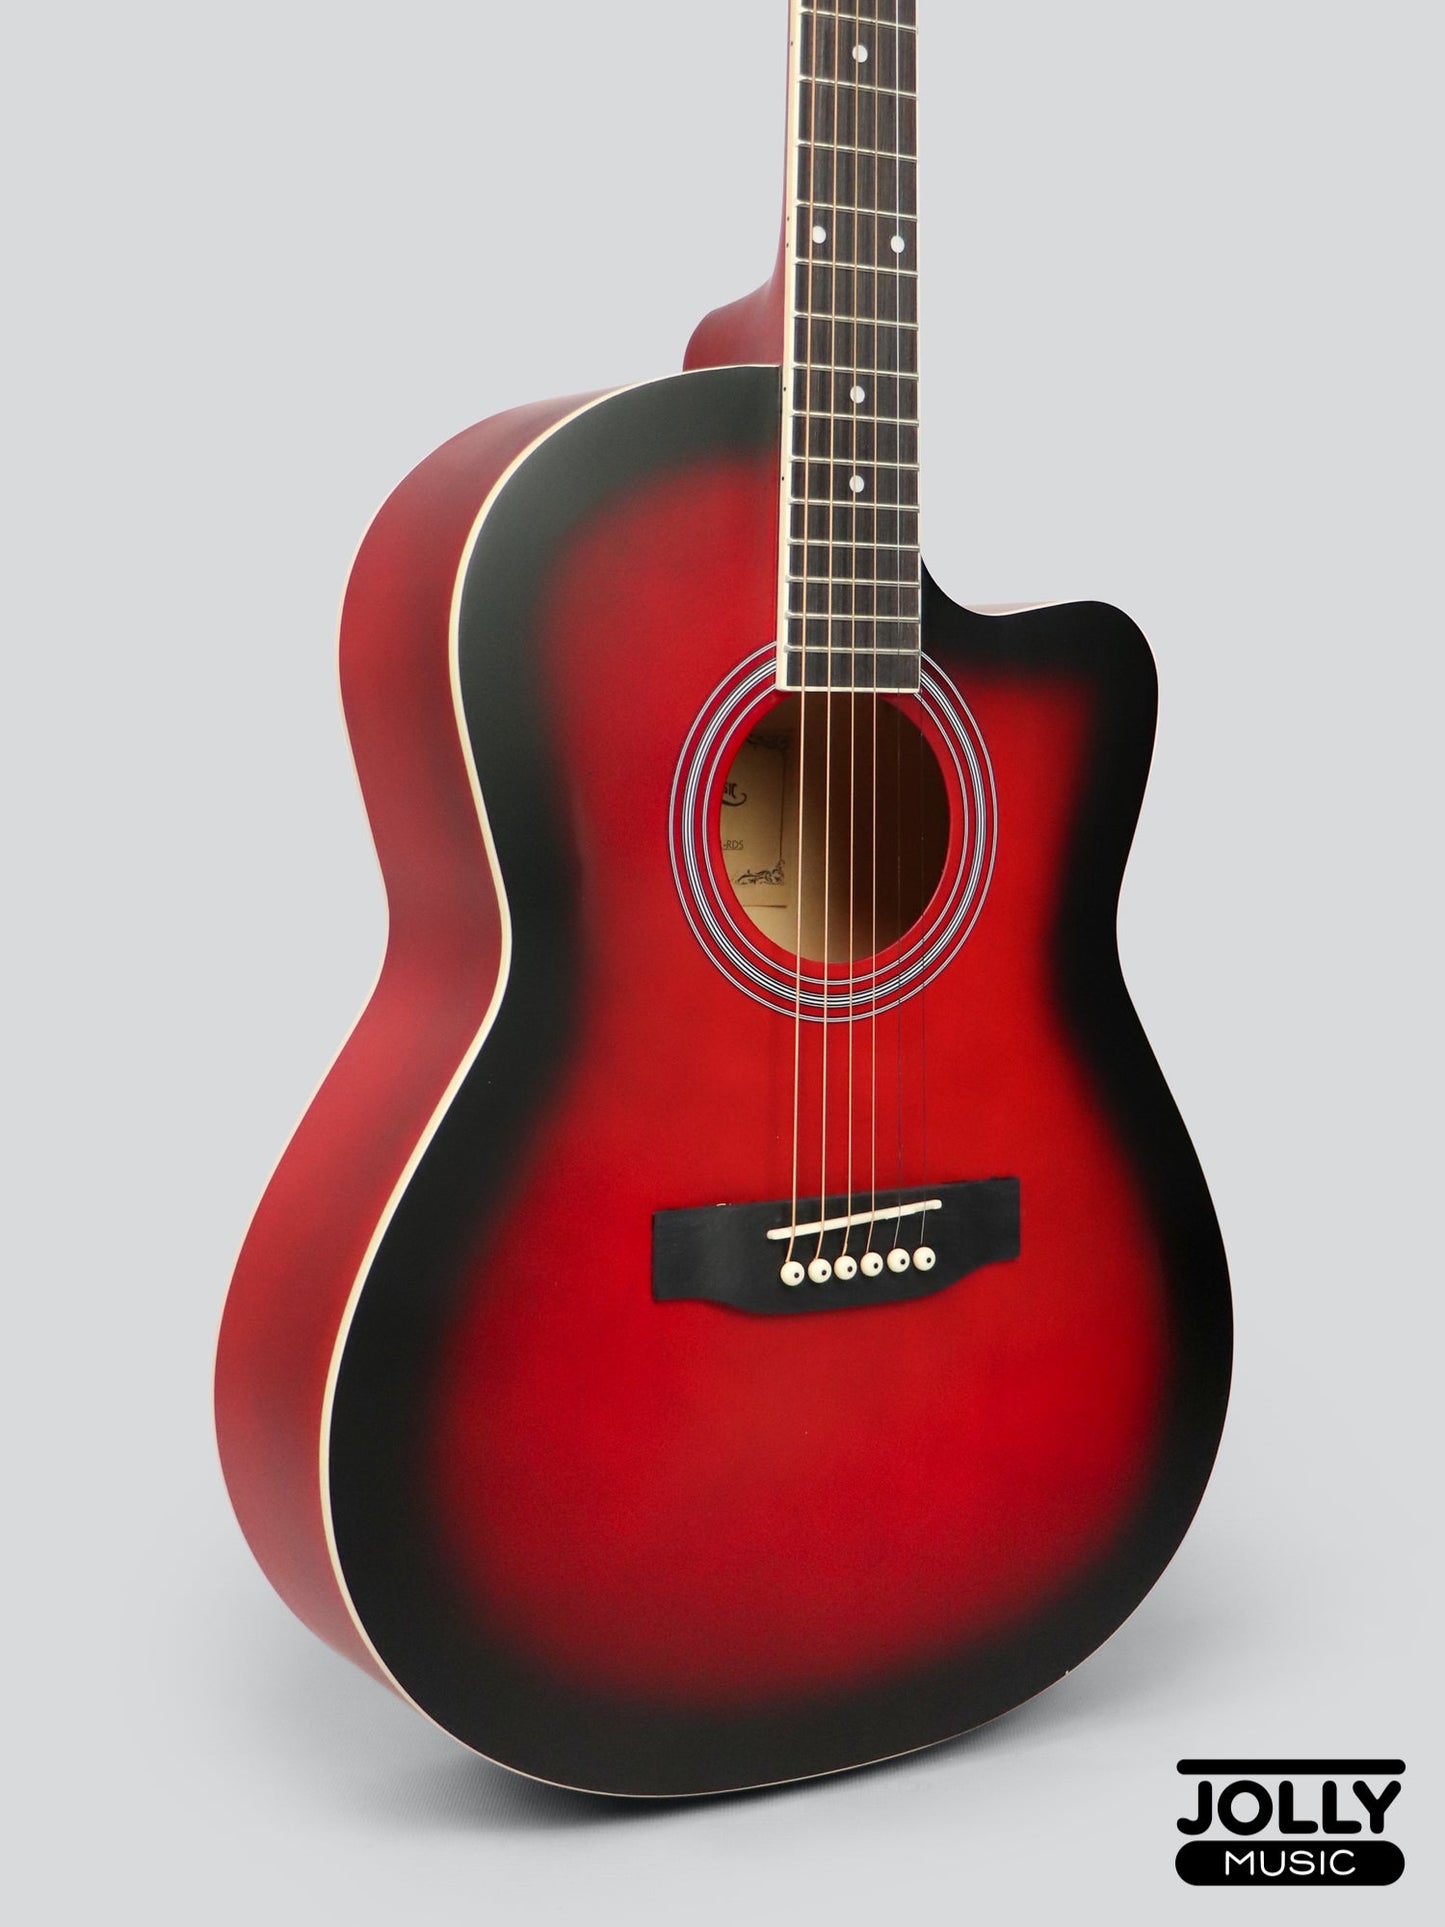 Caravan HS-3911 39" All-Linden Body Acoustic Guitar - Red Sunburst